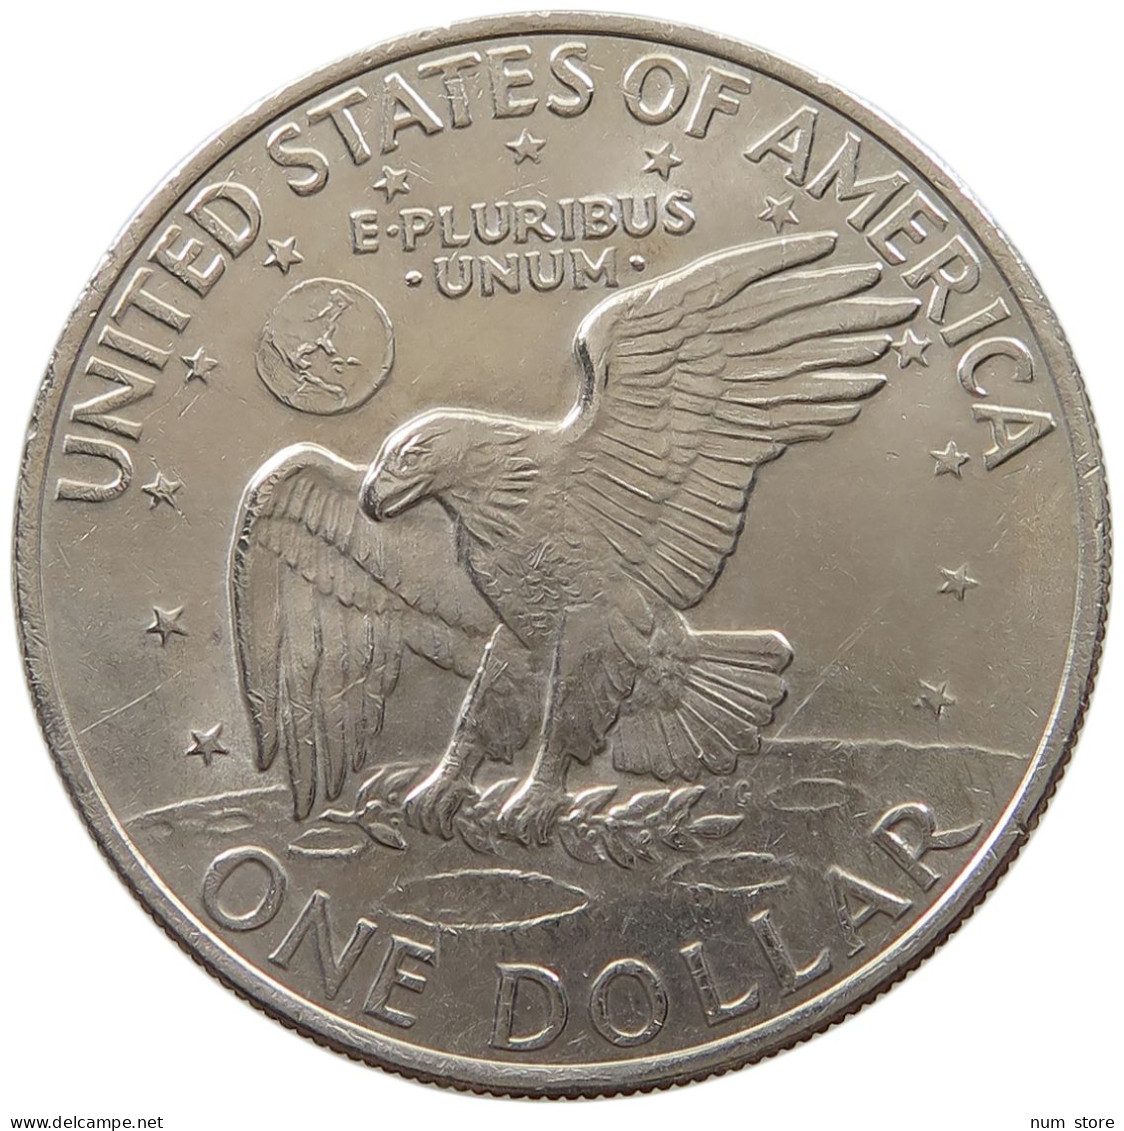 UNITED STATES OF AMERICA DOLLAR 1971 EISENHOWER #a026 0415 - 1971-1978: Eisenhower